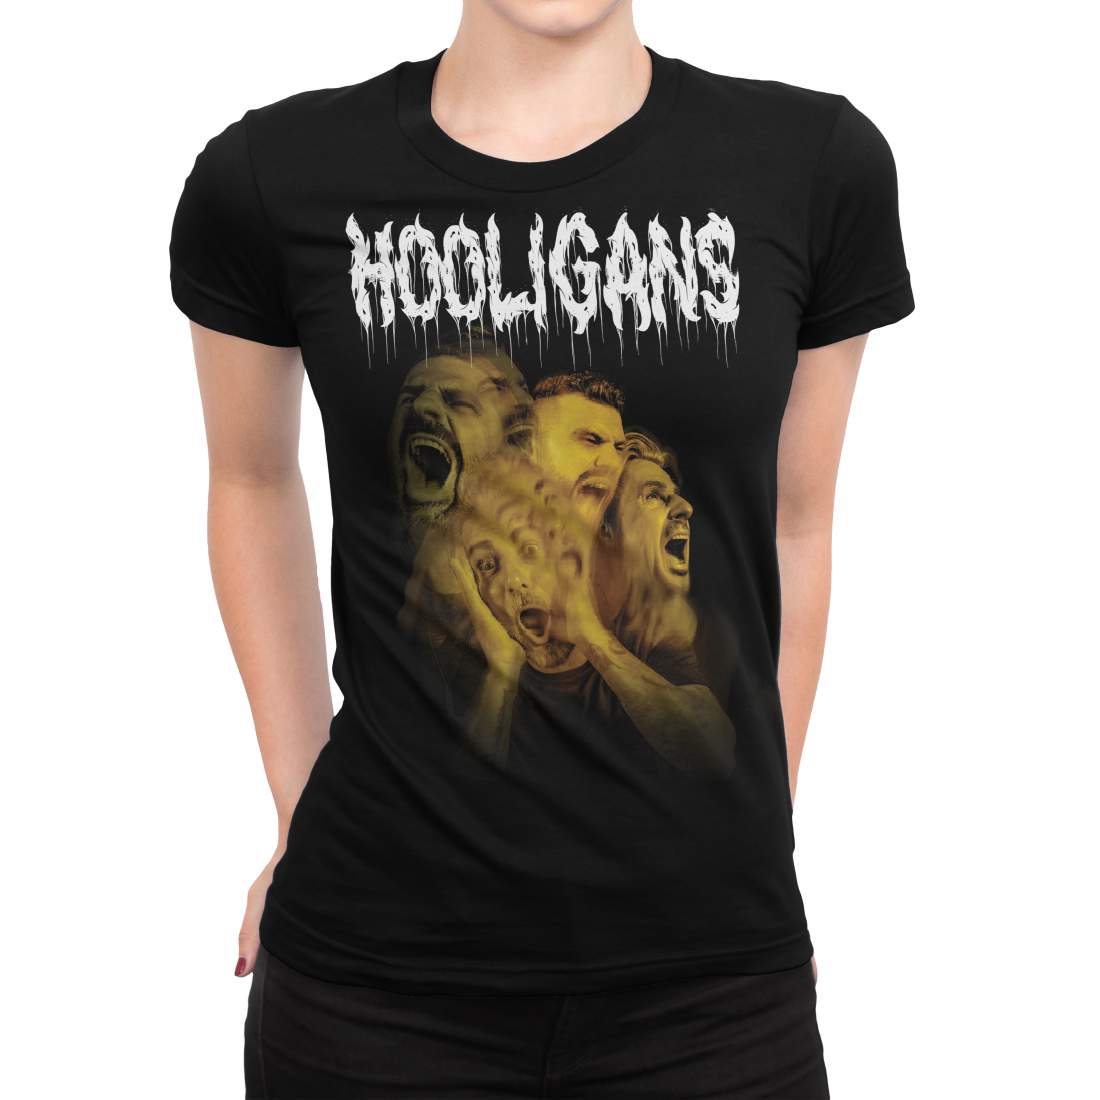 Hooligans - ”Scream” - NŐI T-shirt